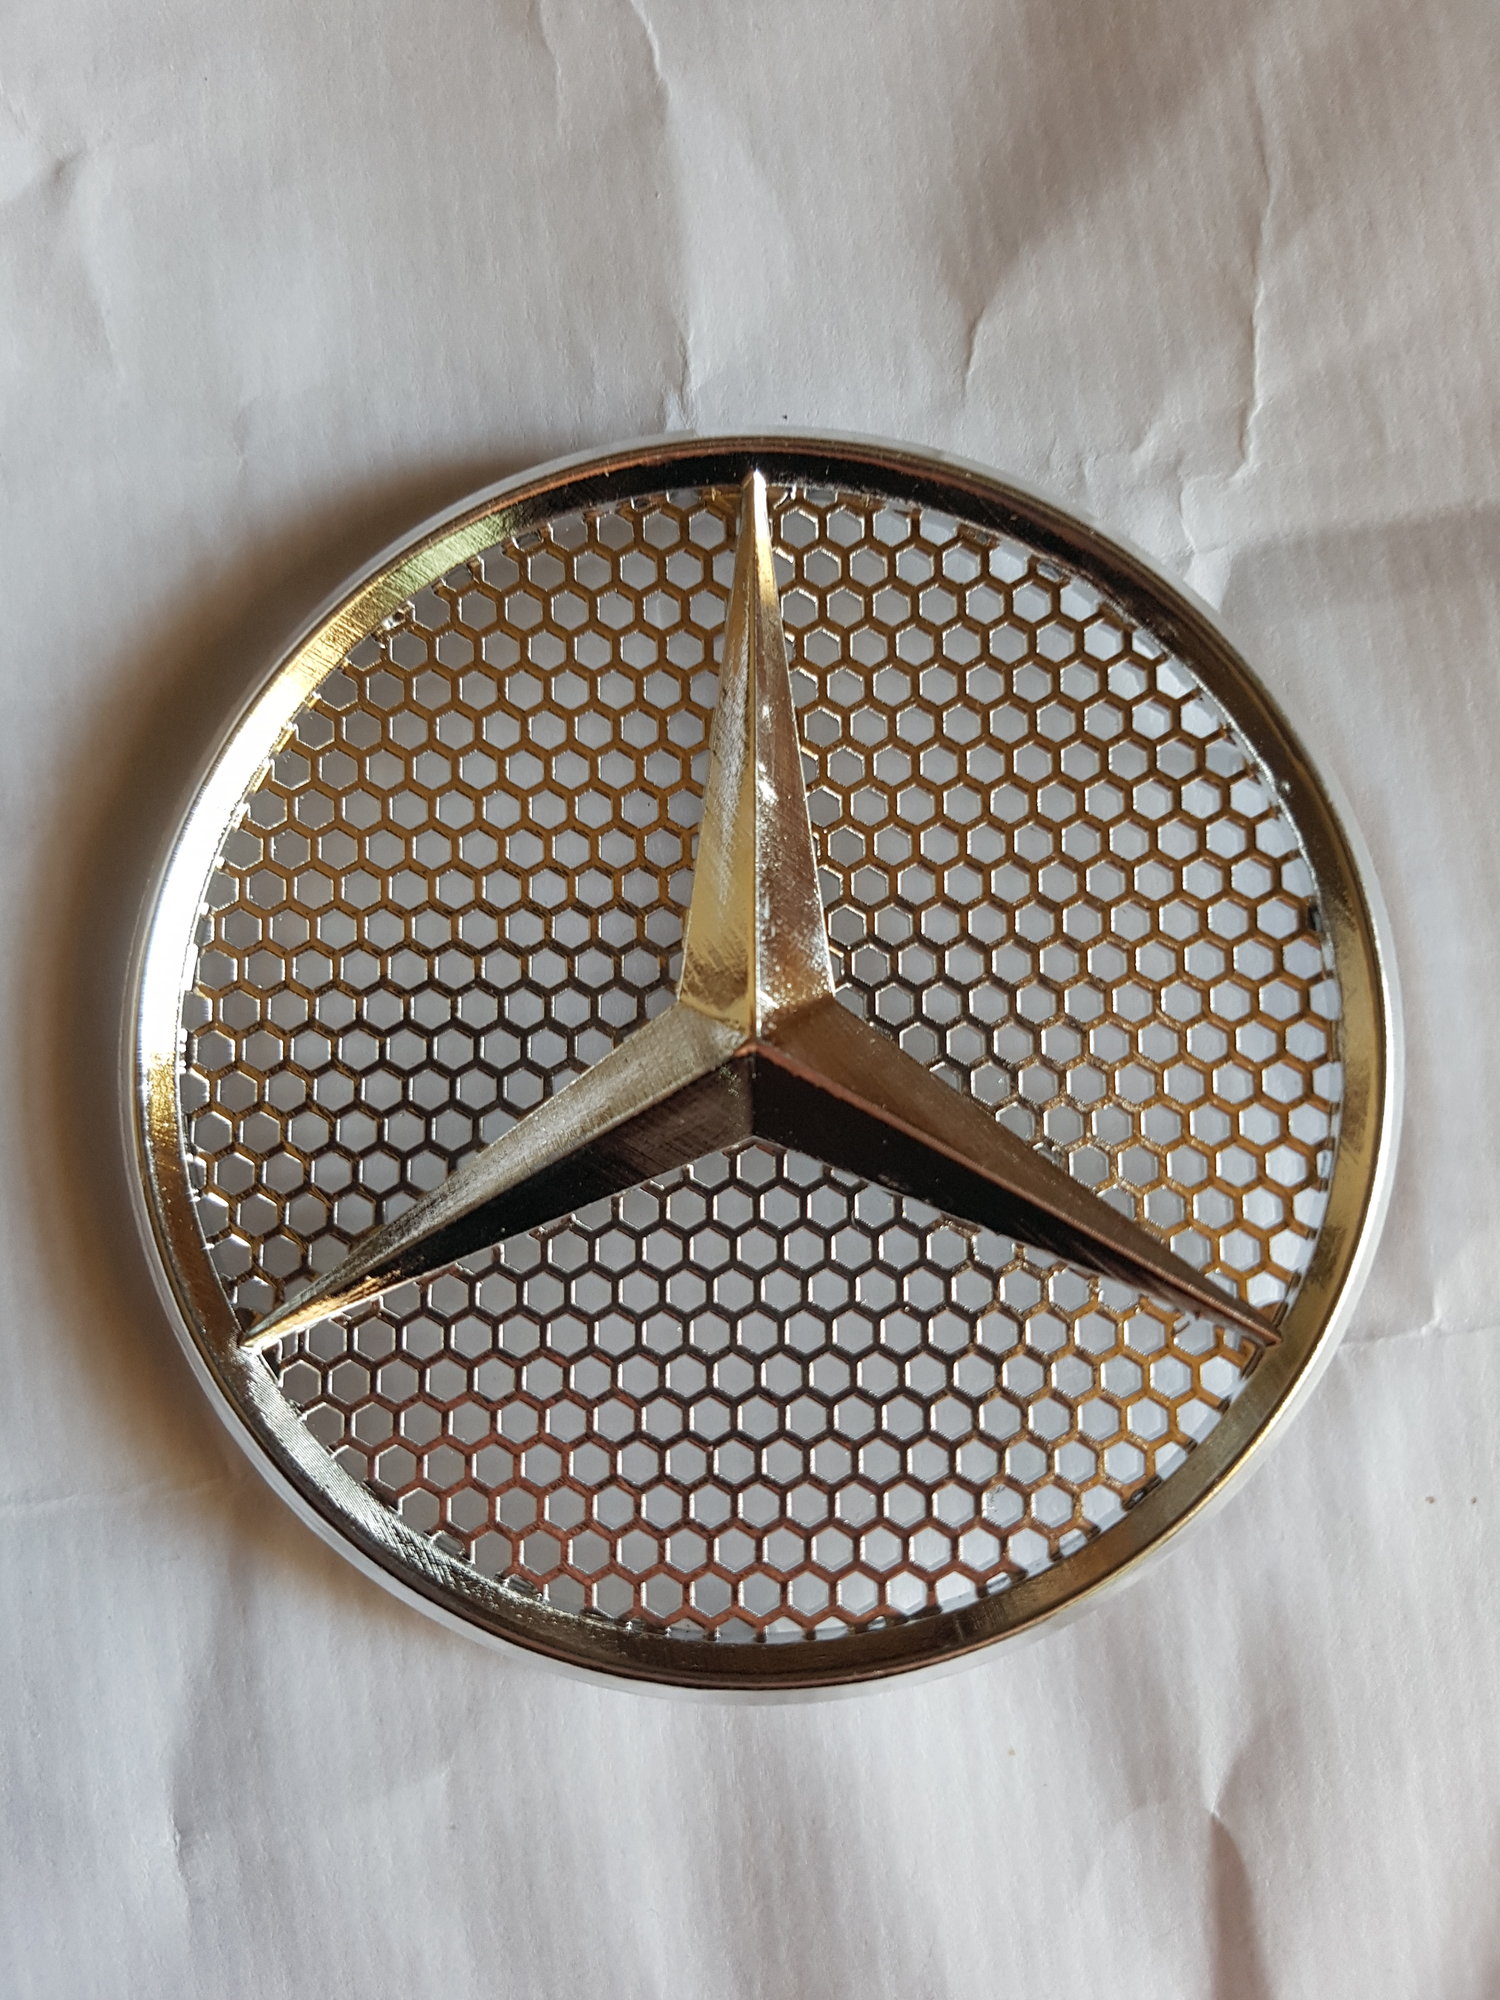 Accessories - Mercedes Benz star M156 Engine cover Emblem Badge - New - Athens, Greece